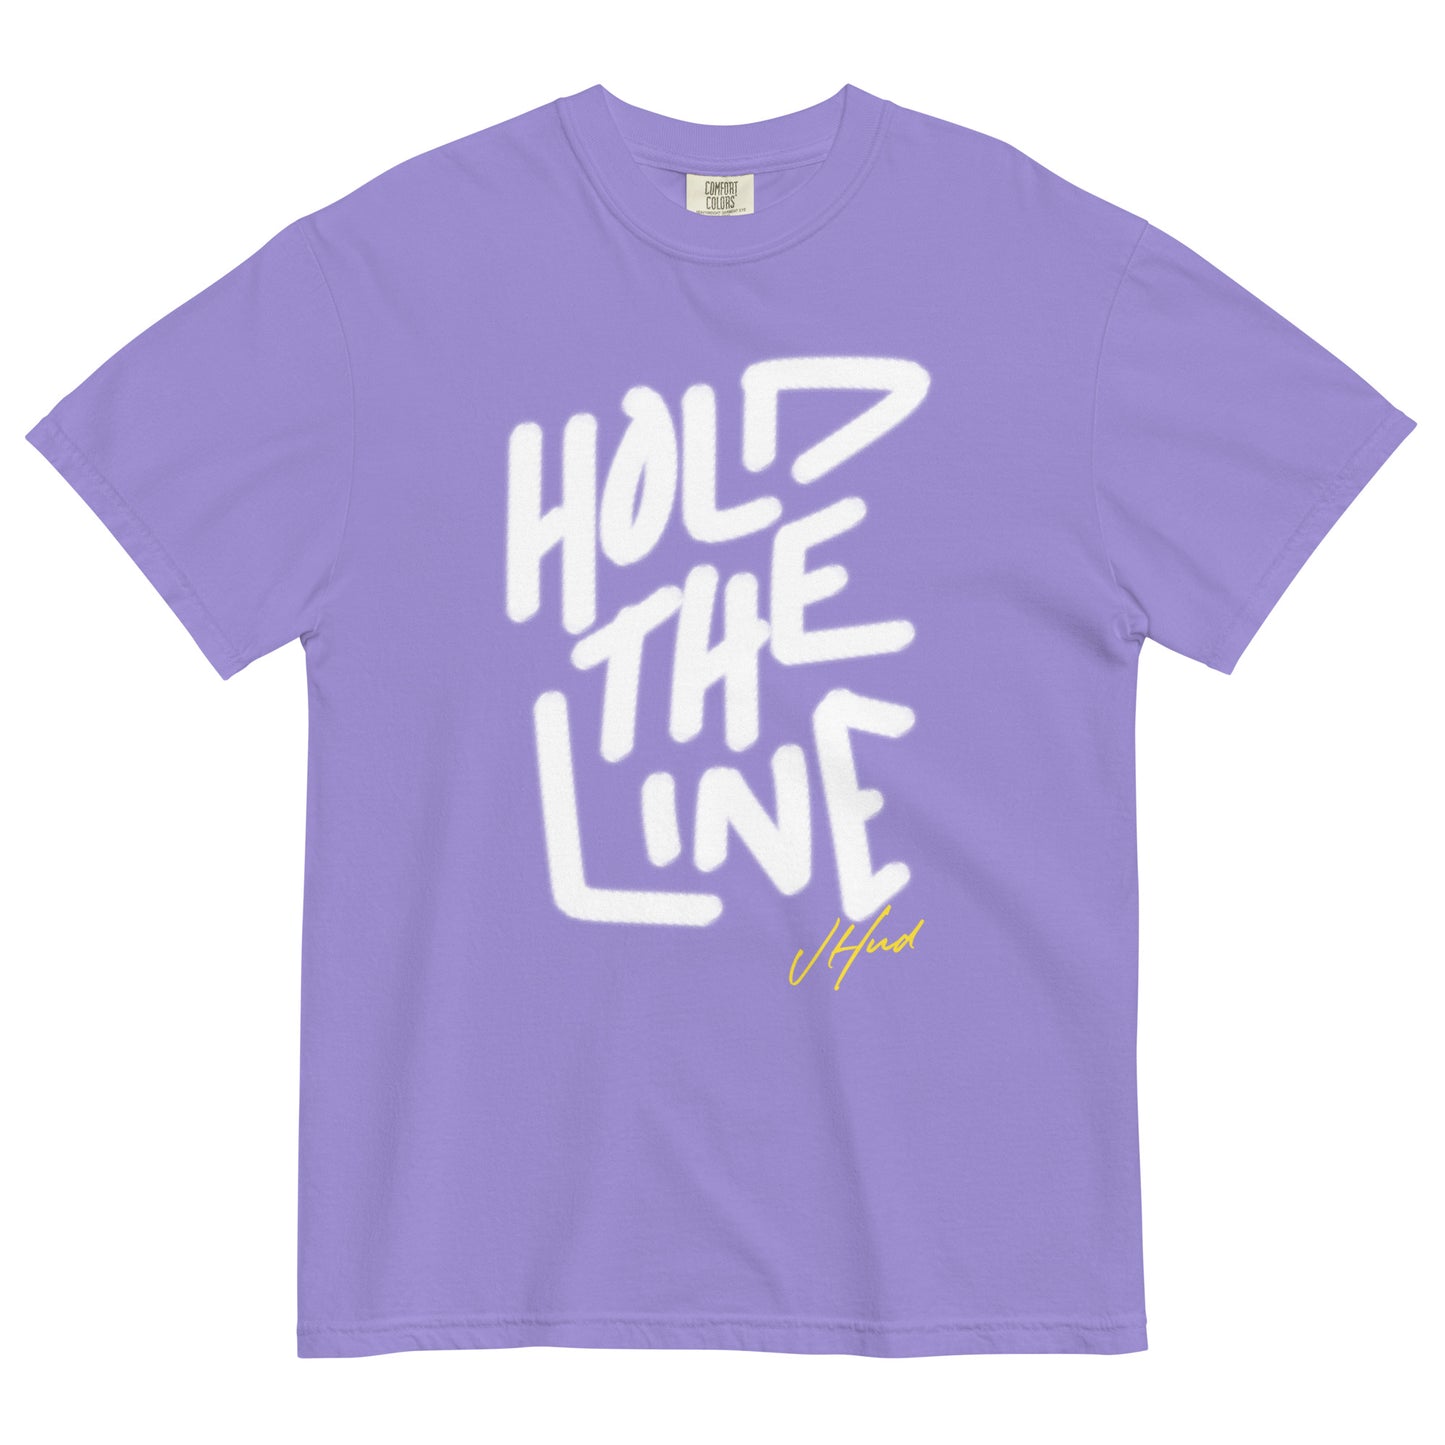 Hold the Line Heavyweight T-Shirt - Seafoam